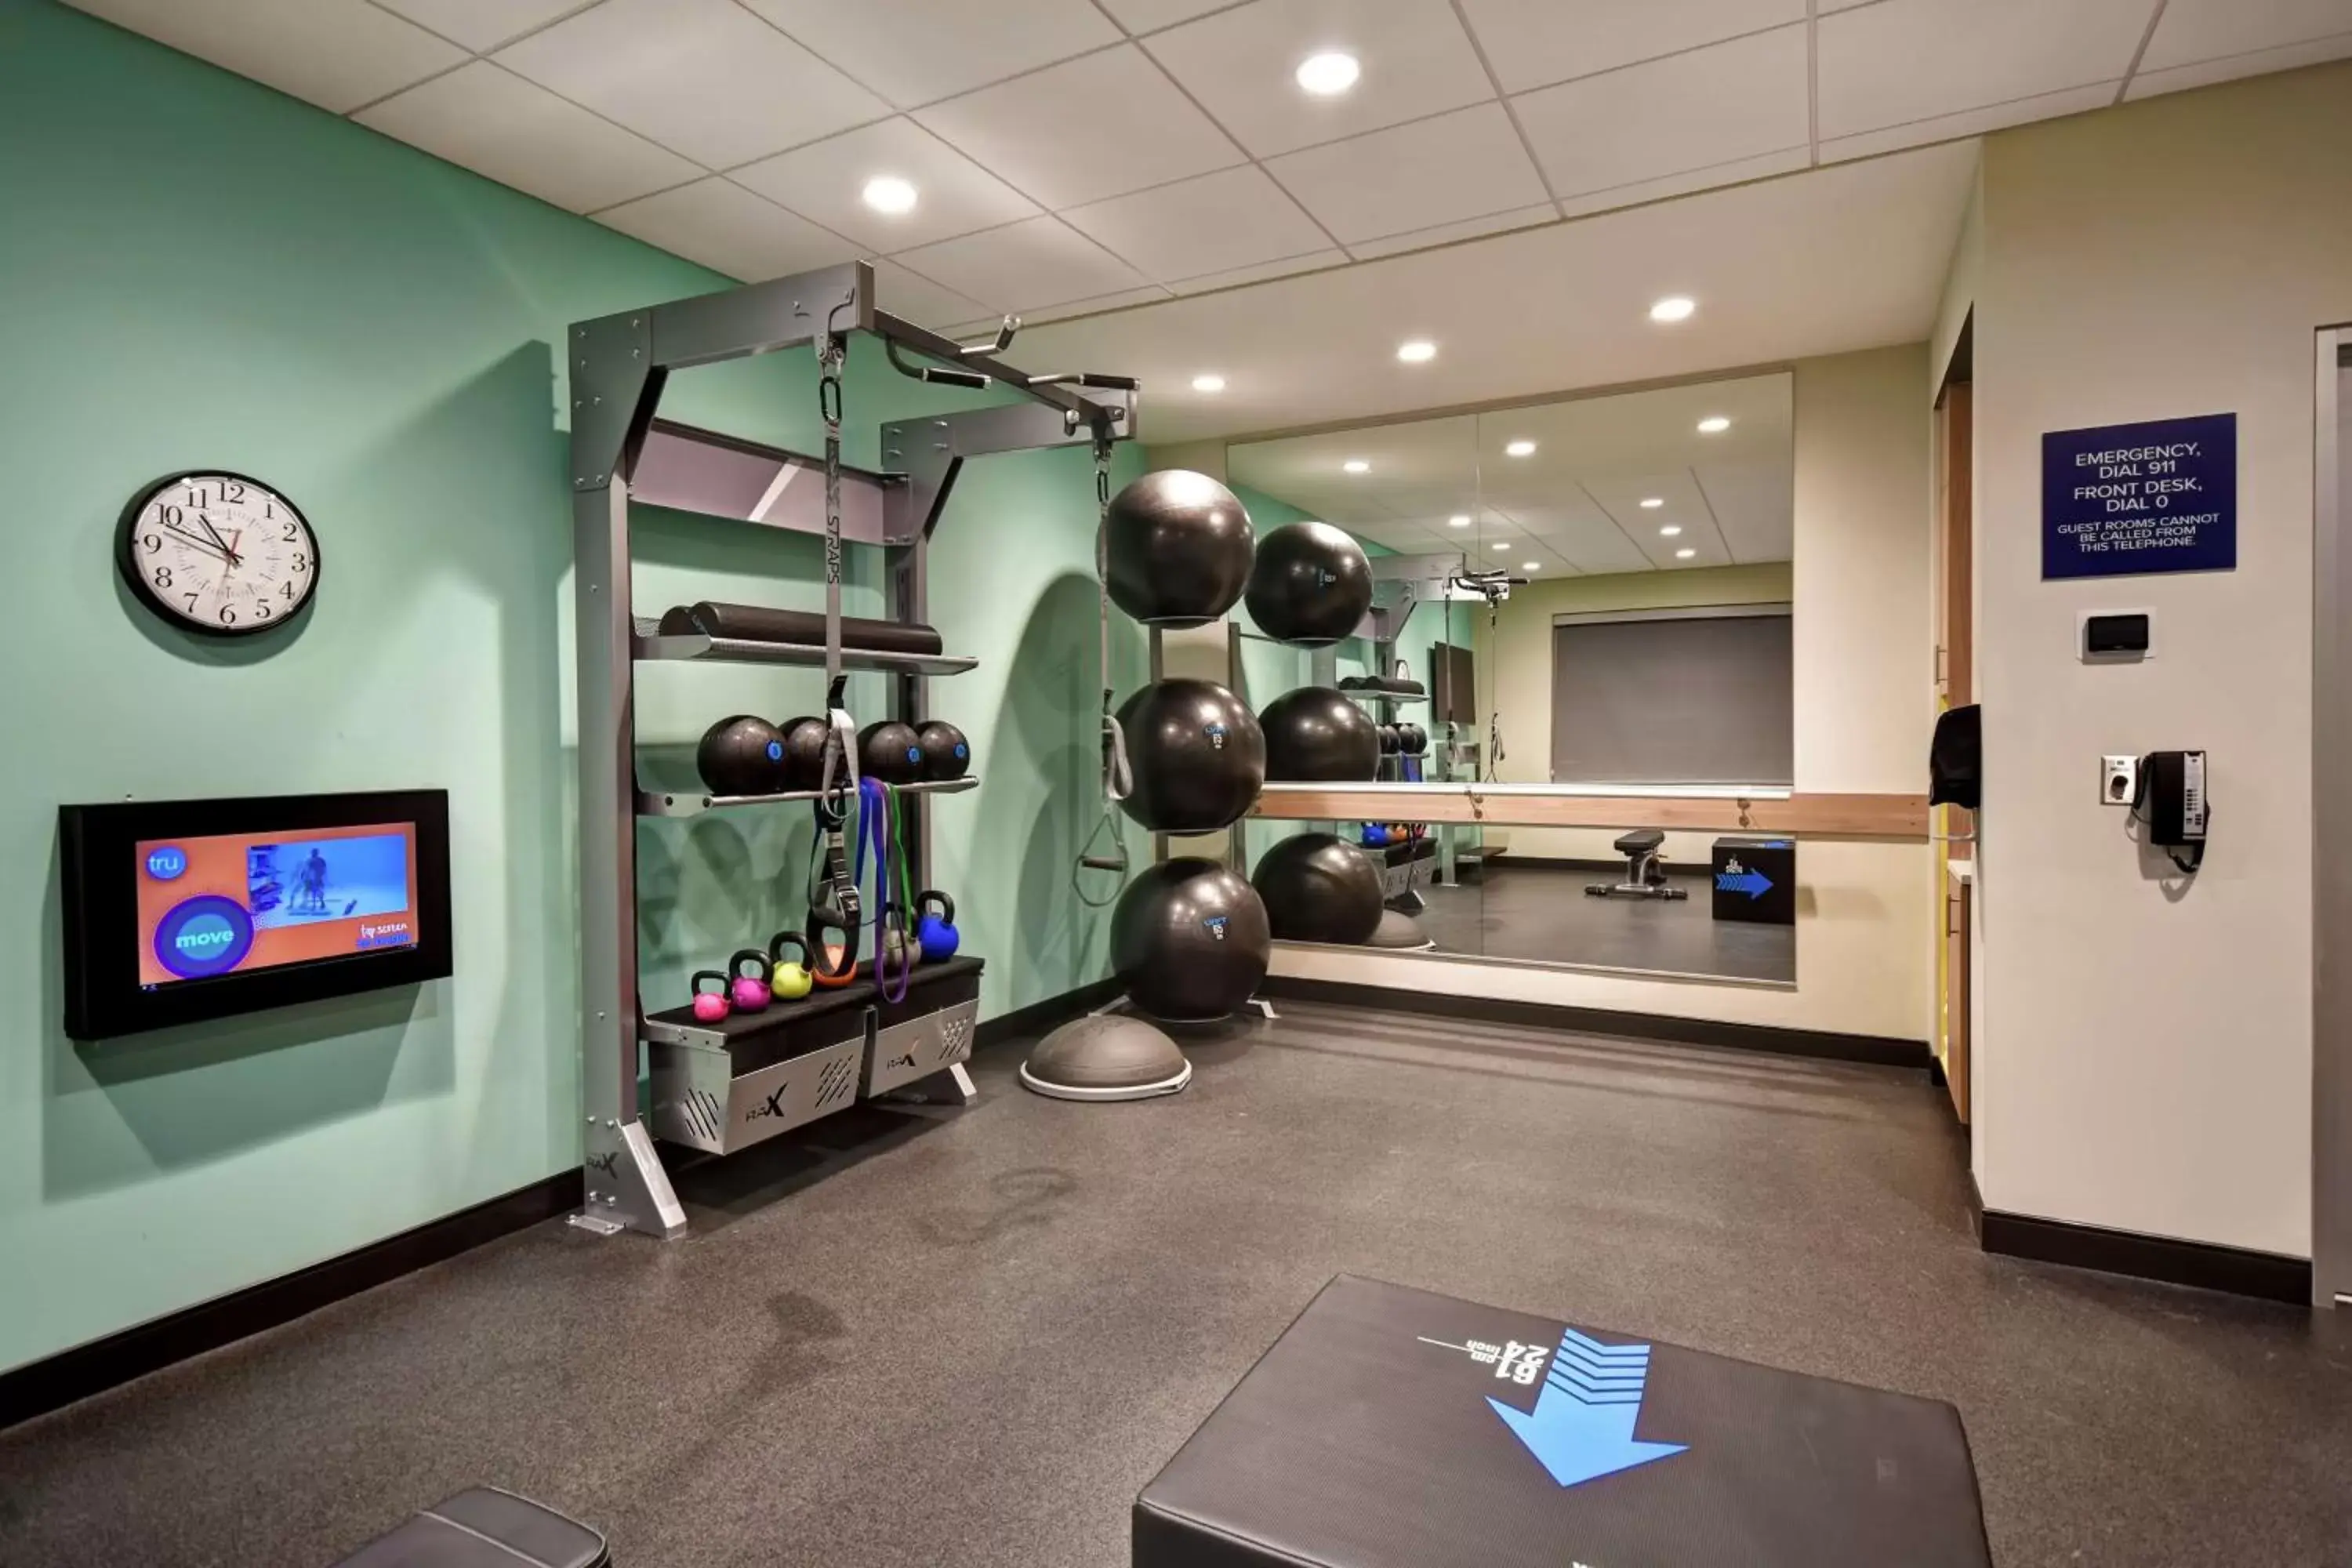 Fitness centre/facilities, Fitness Center/Facilities in Tru By Hilton Cincinnati Airport South Florence